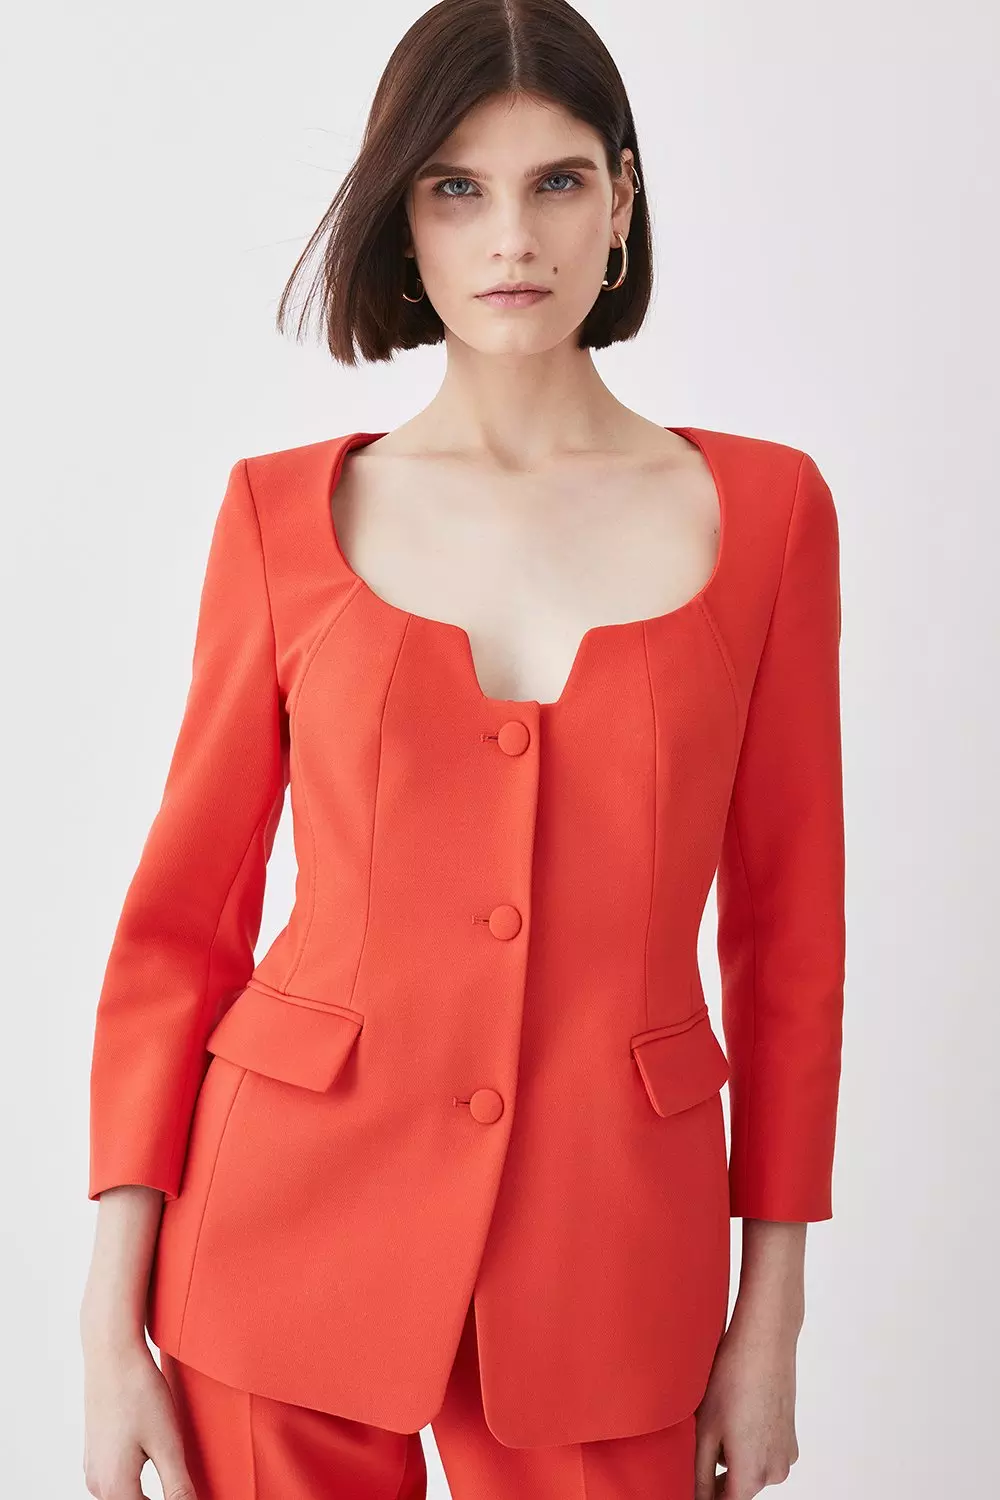 Effortlessly Chic Women Blazer, Suit Coat